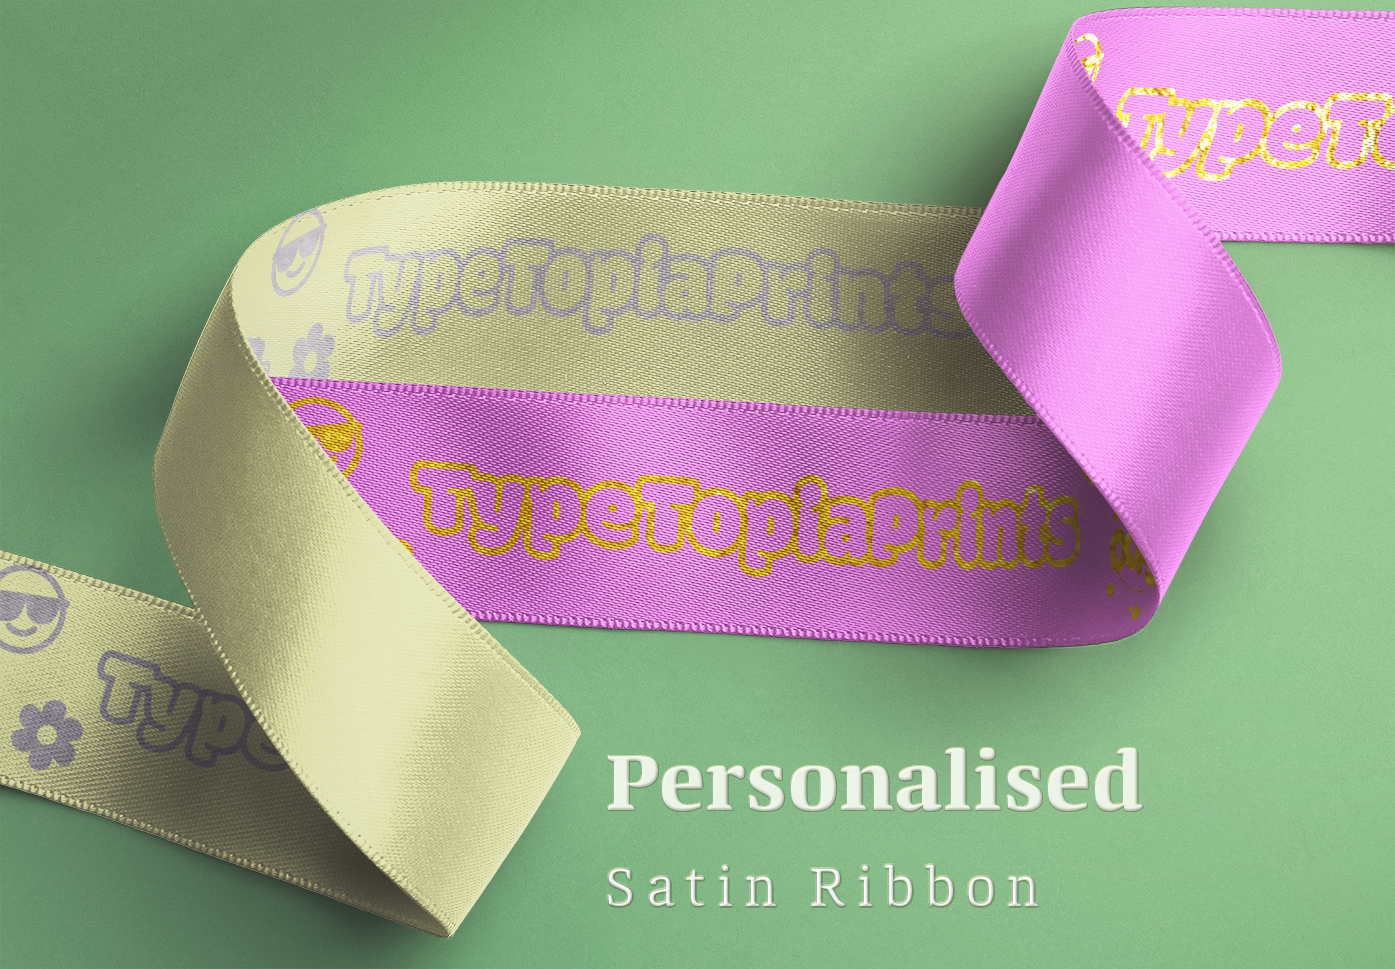 Personalised Satin Ribbon